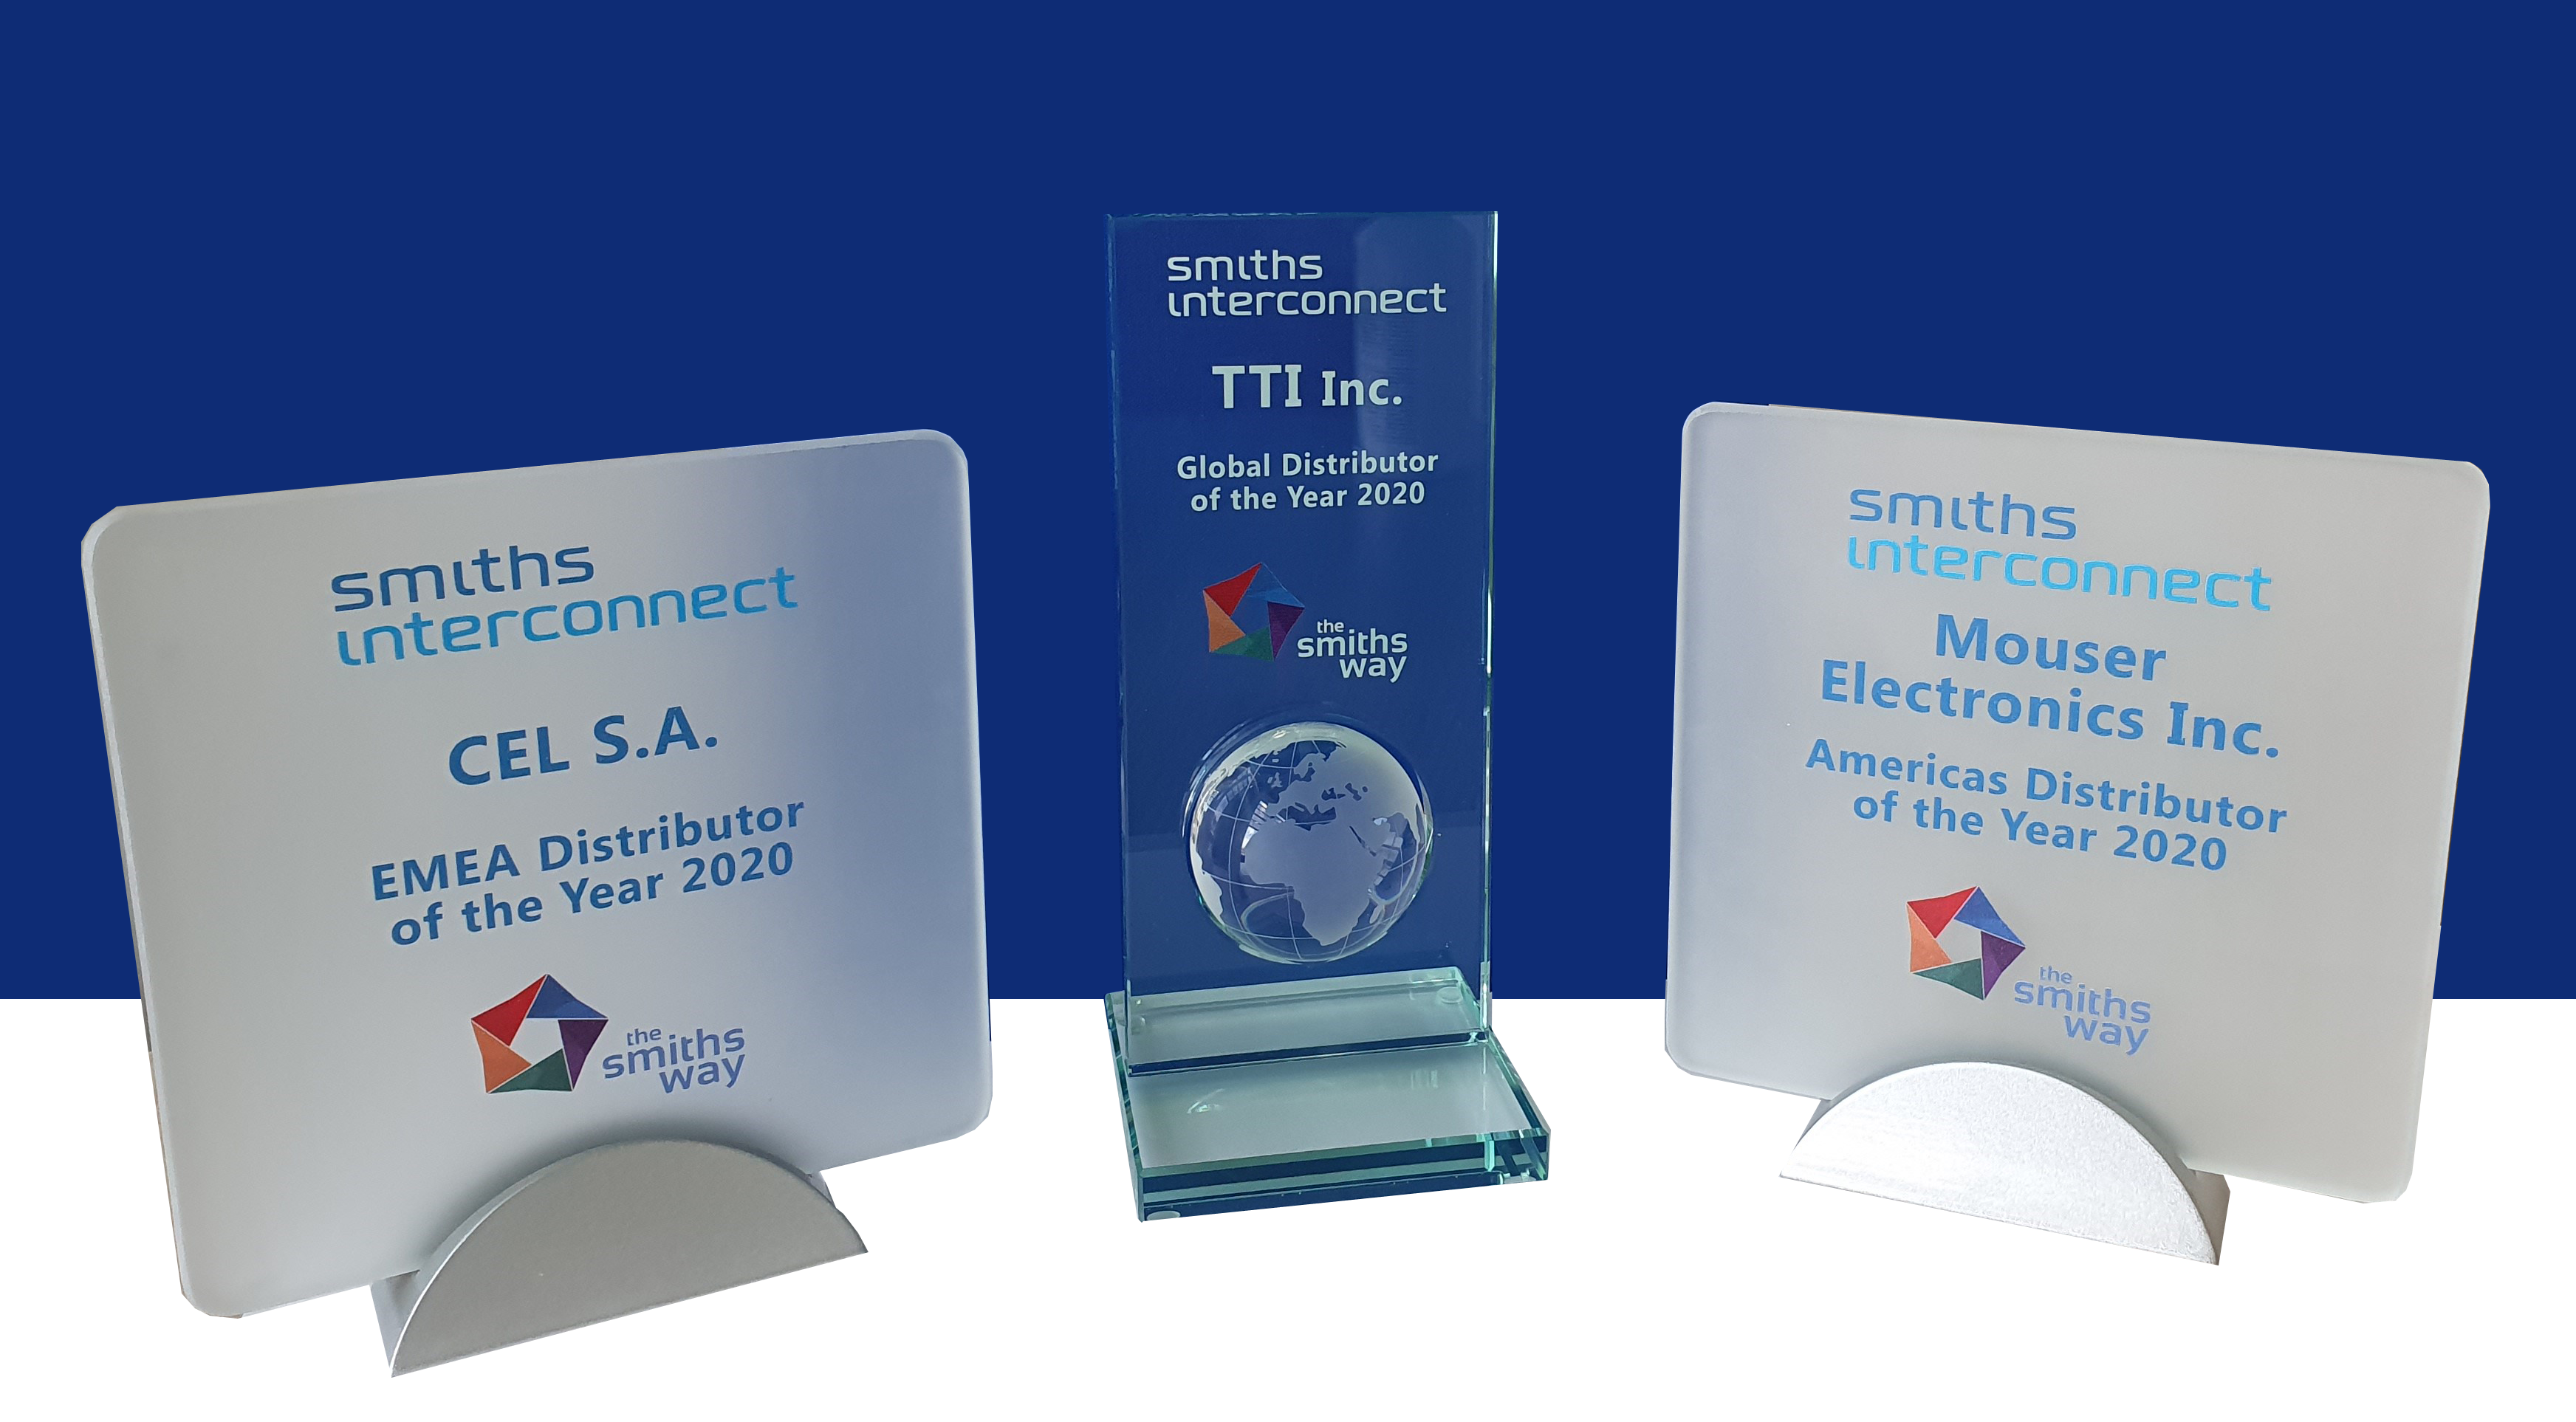 Smiths Interconnect Global award to TTI Inc